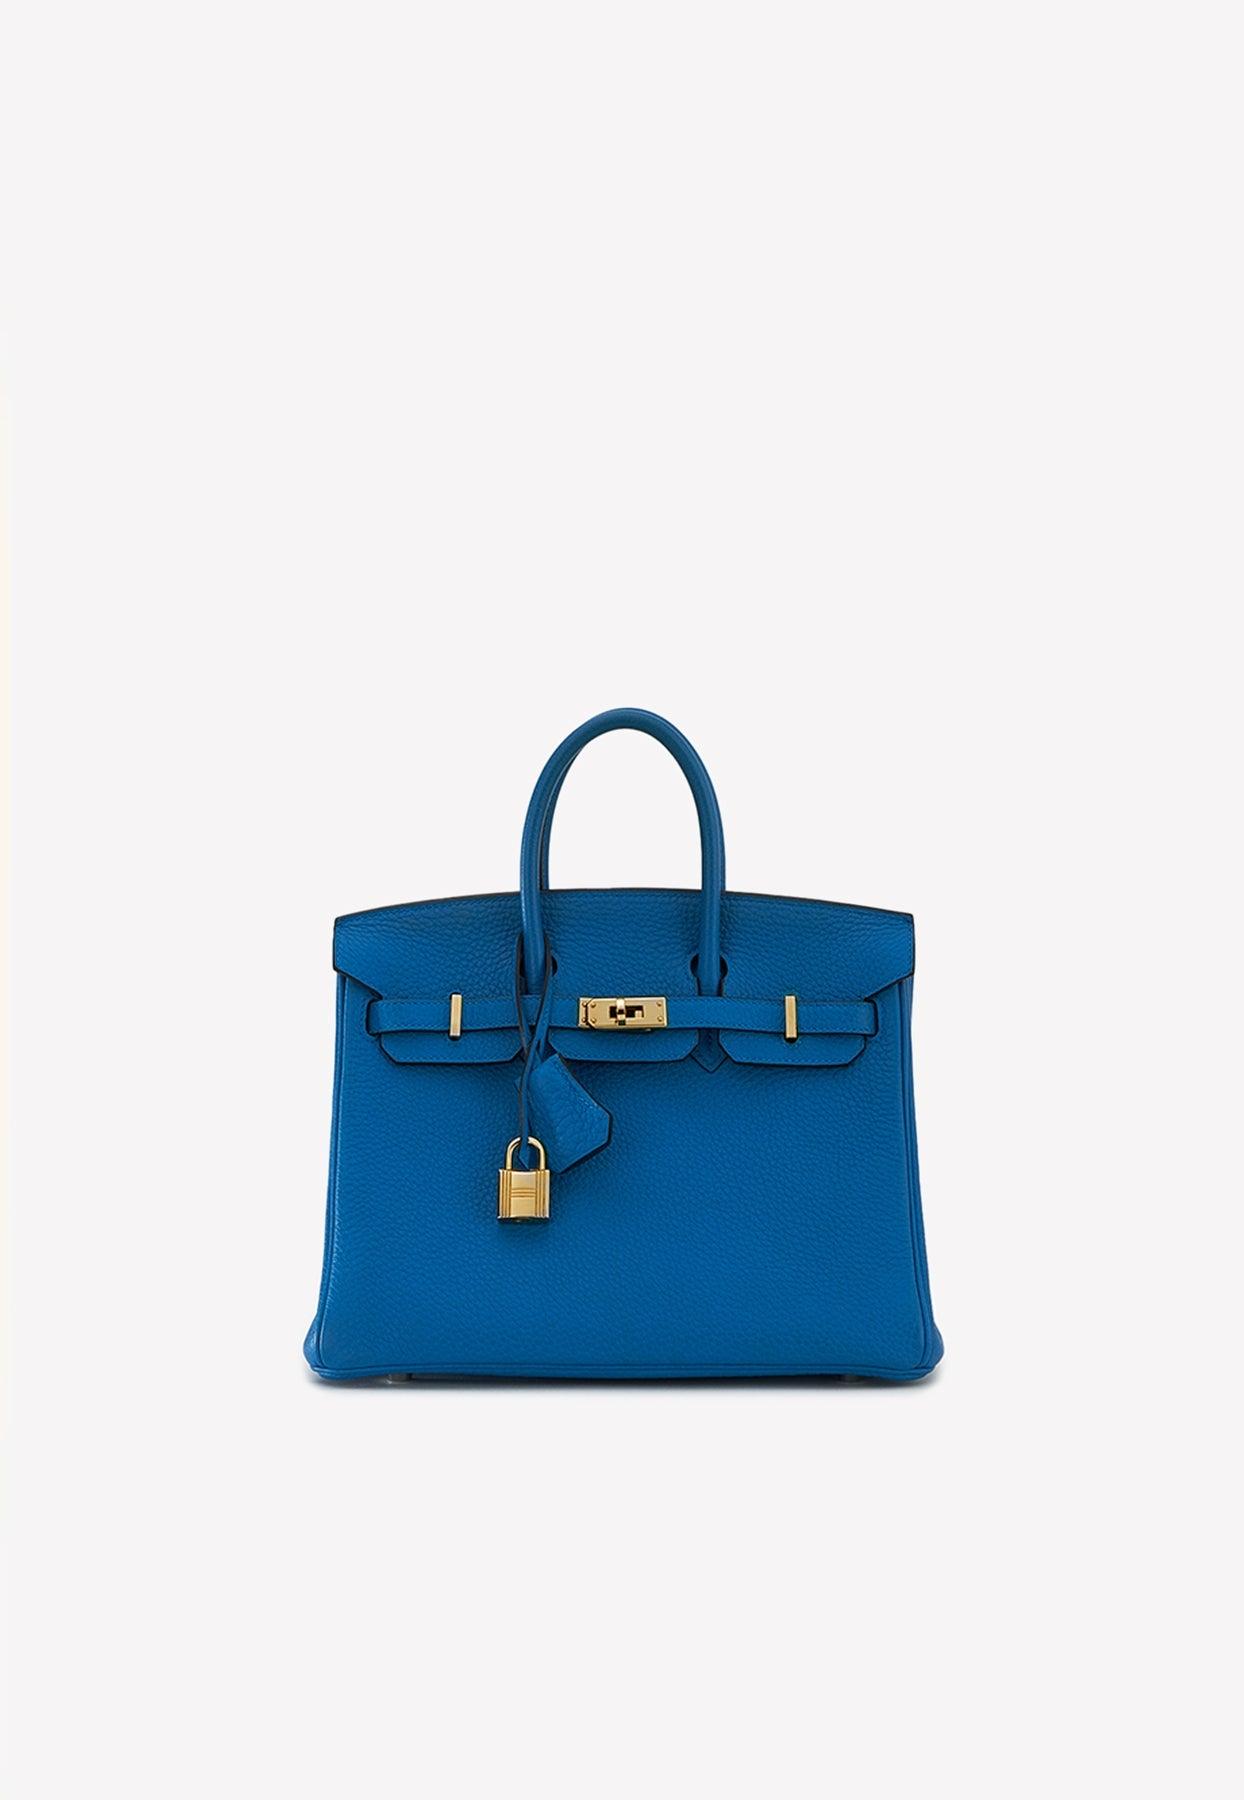 hermes blue birkin handbag